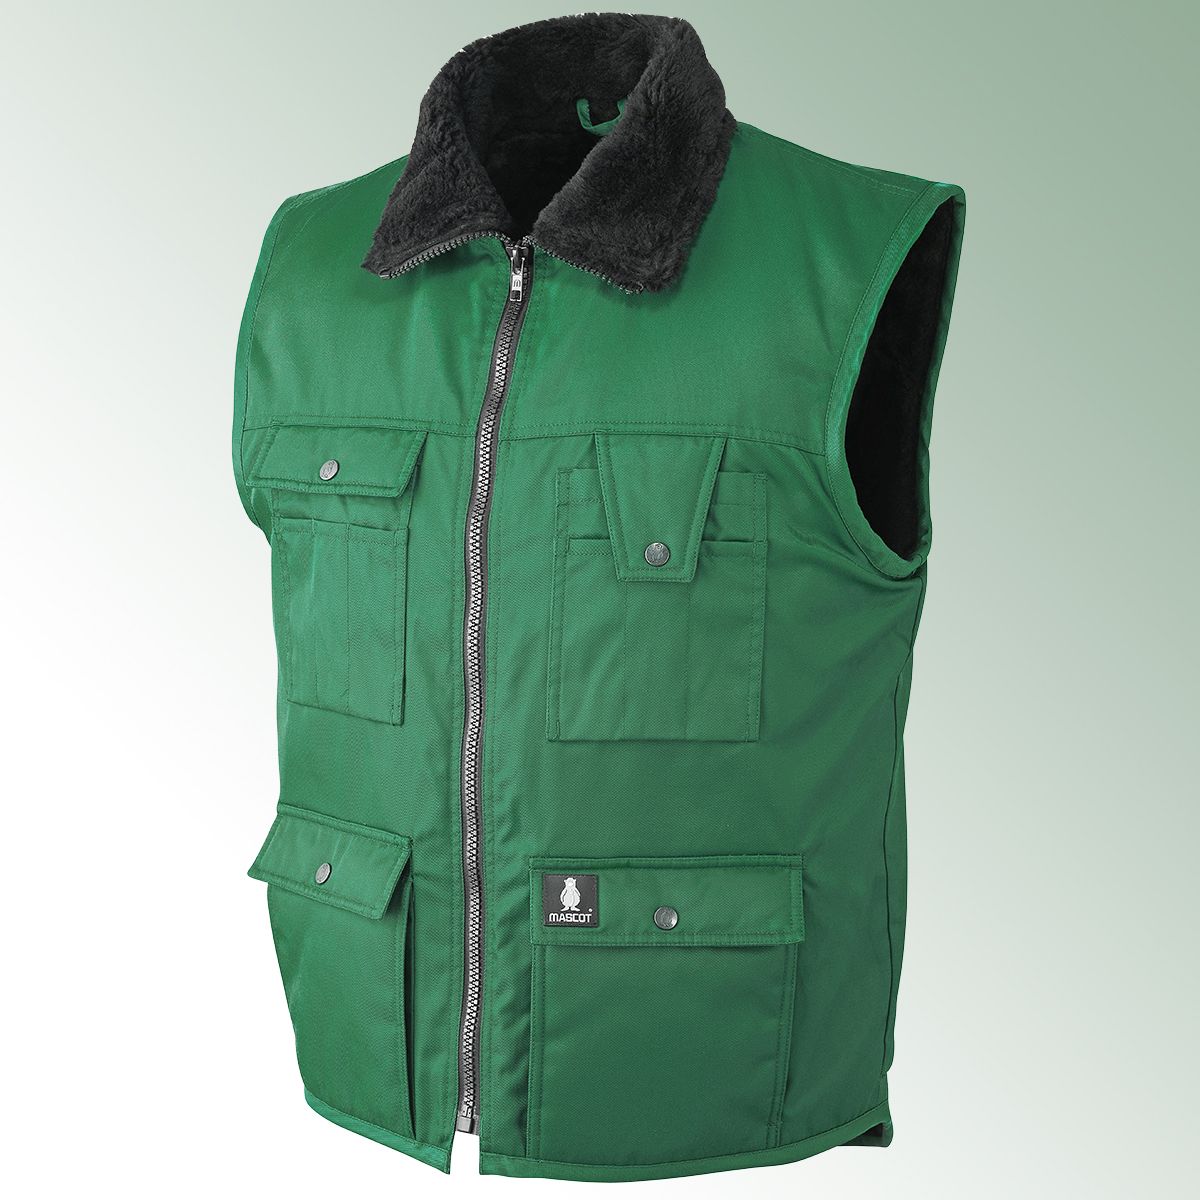 Winter waistcoat Solden size 2XL green